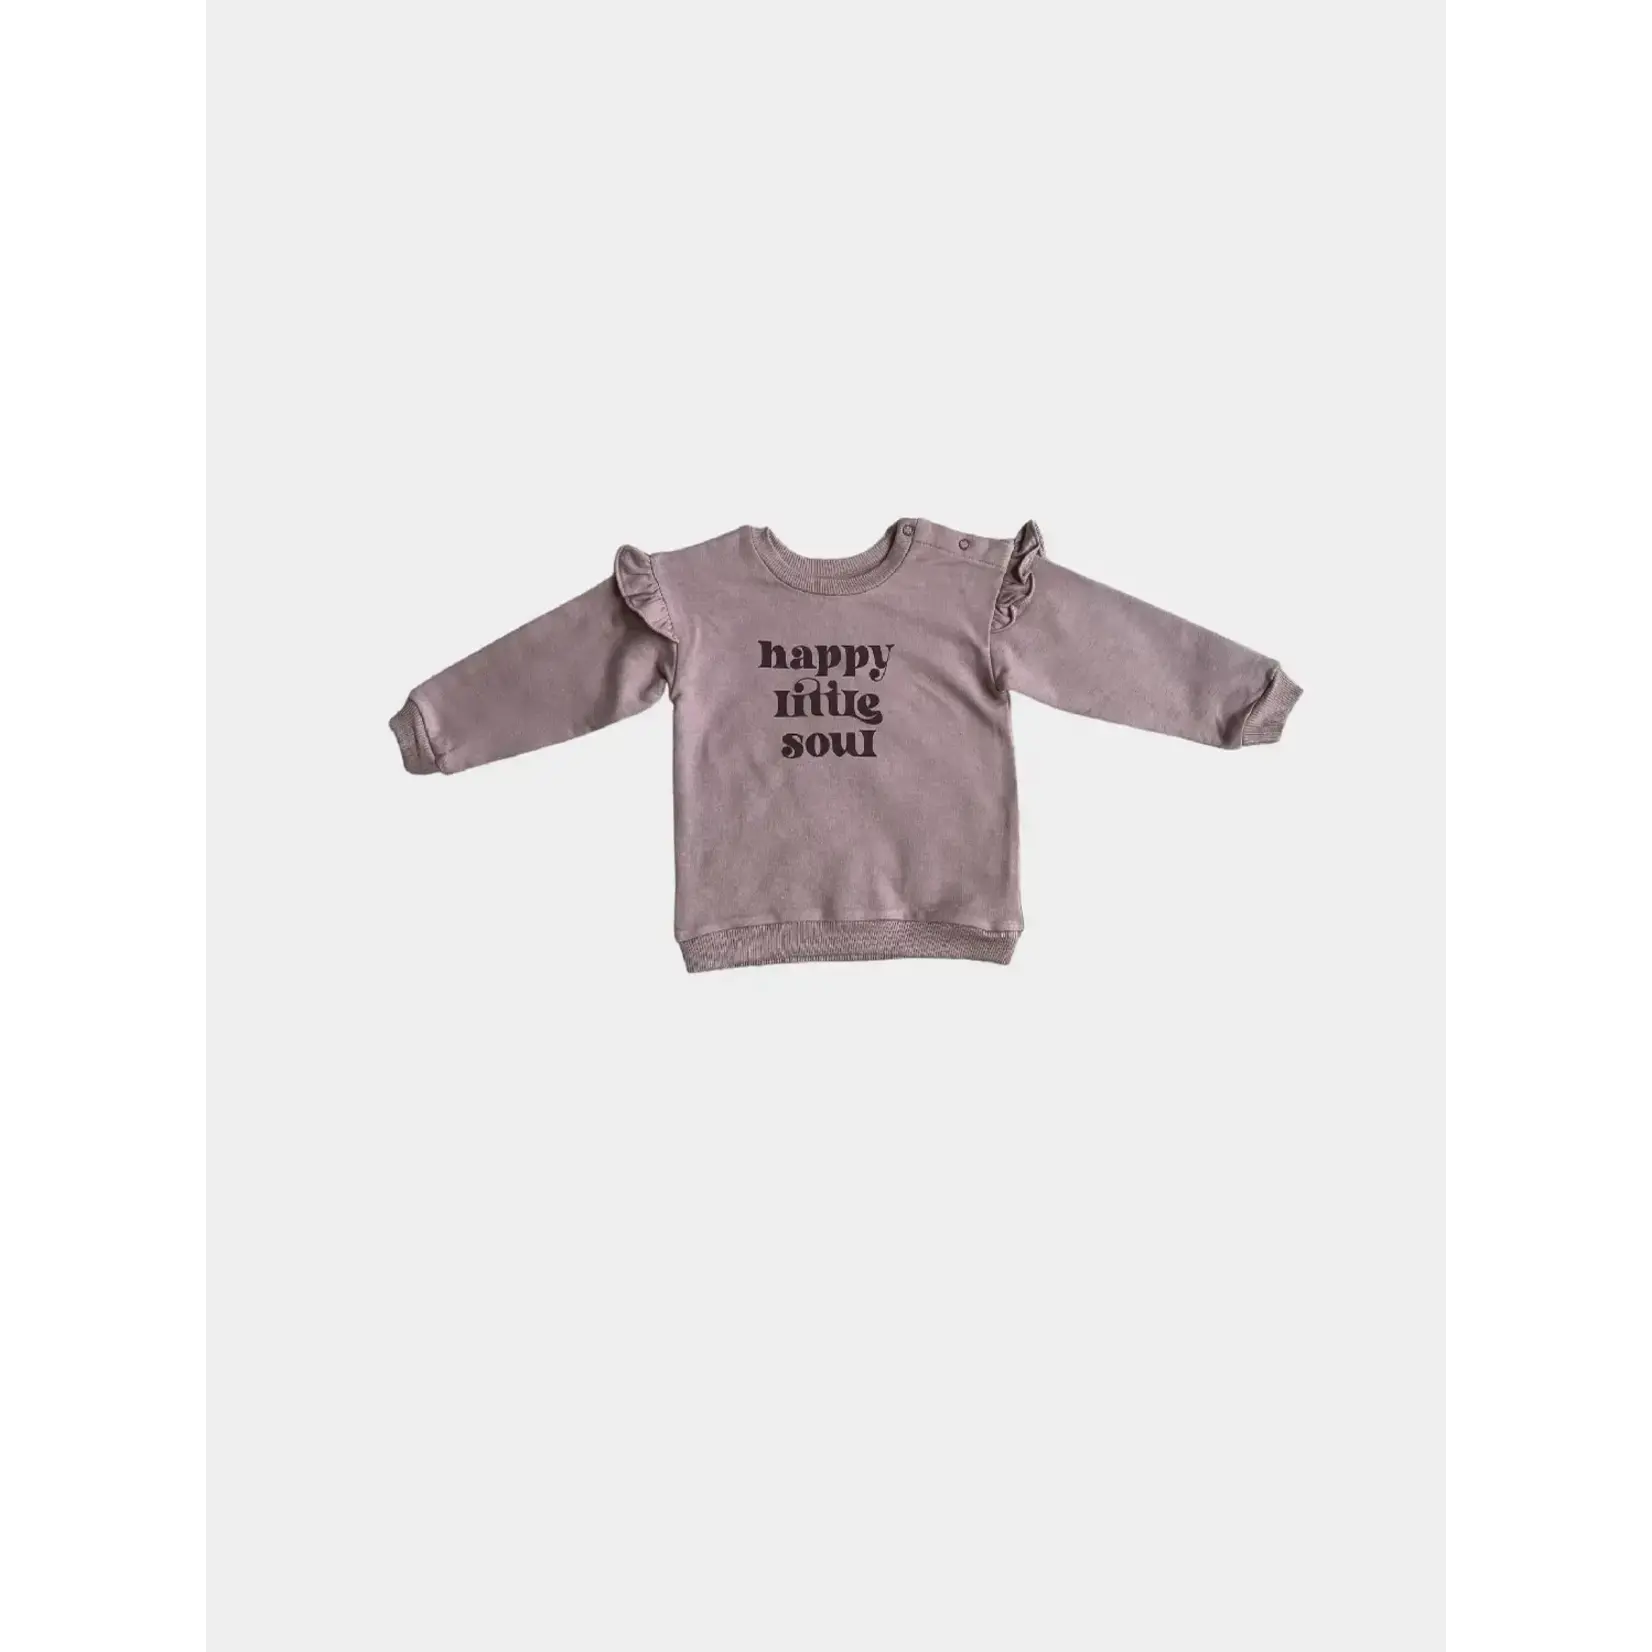 babysprouts clothing company Ruffle Sweatshirt in Happy Little Soul